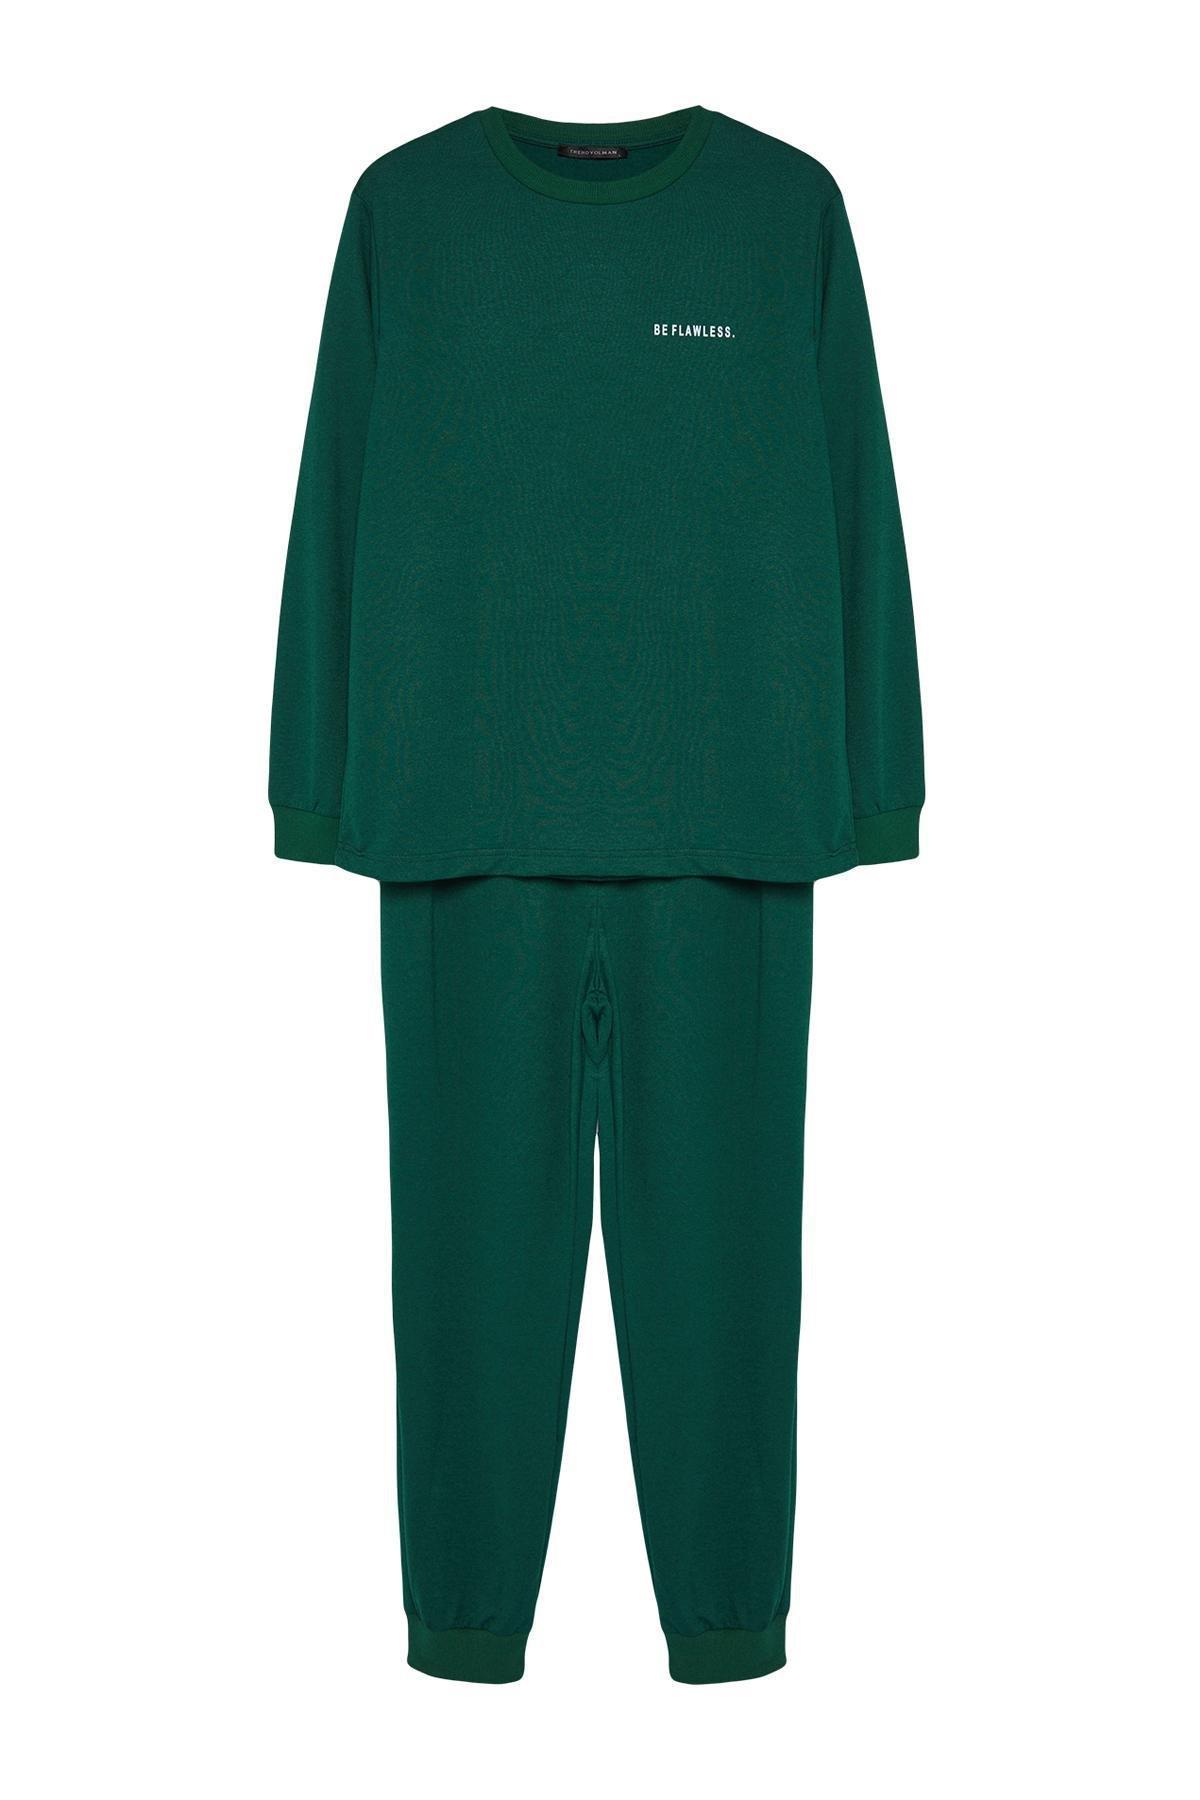 Trendyol - Green Regular Printed Knitted Pyjamas Set